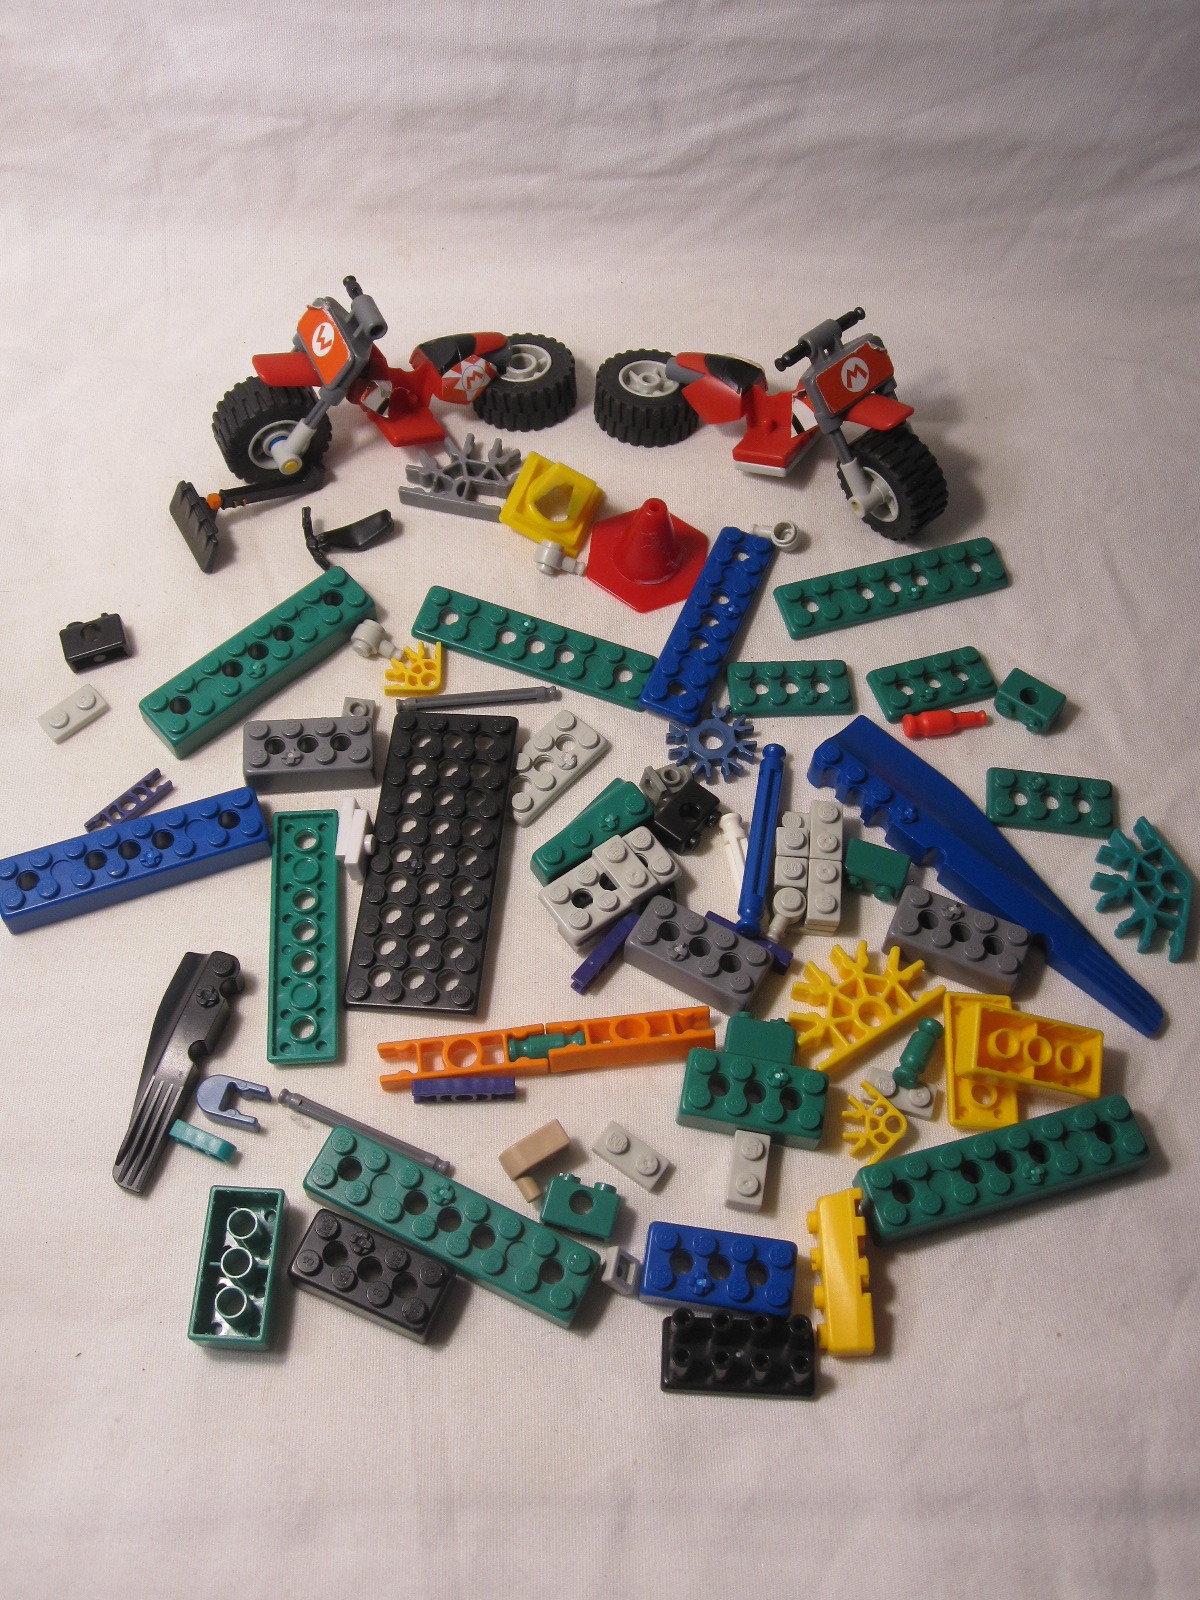 lot of vintage K'Nex building Blocks - Mario Bros Motorcycles + blocks & bits - $20.00